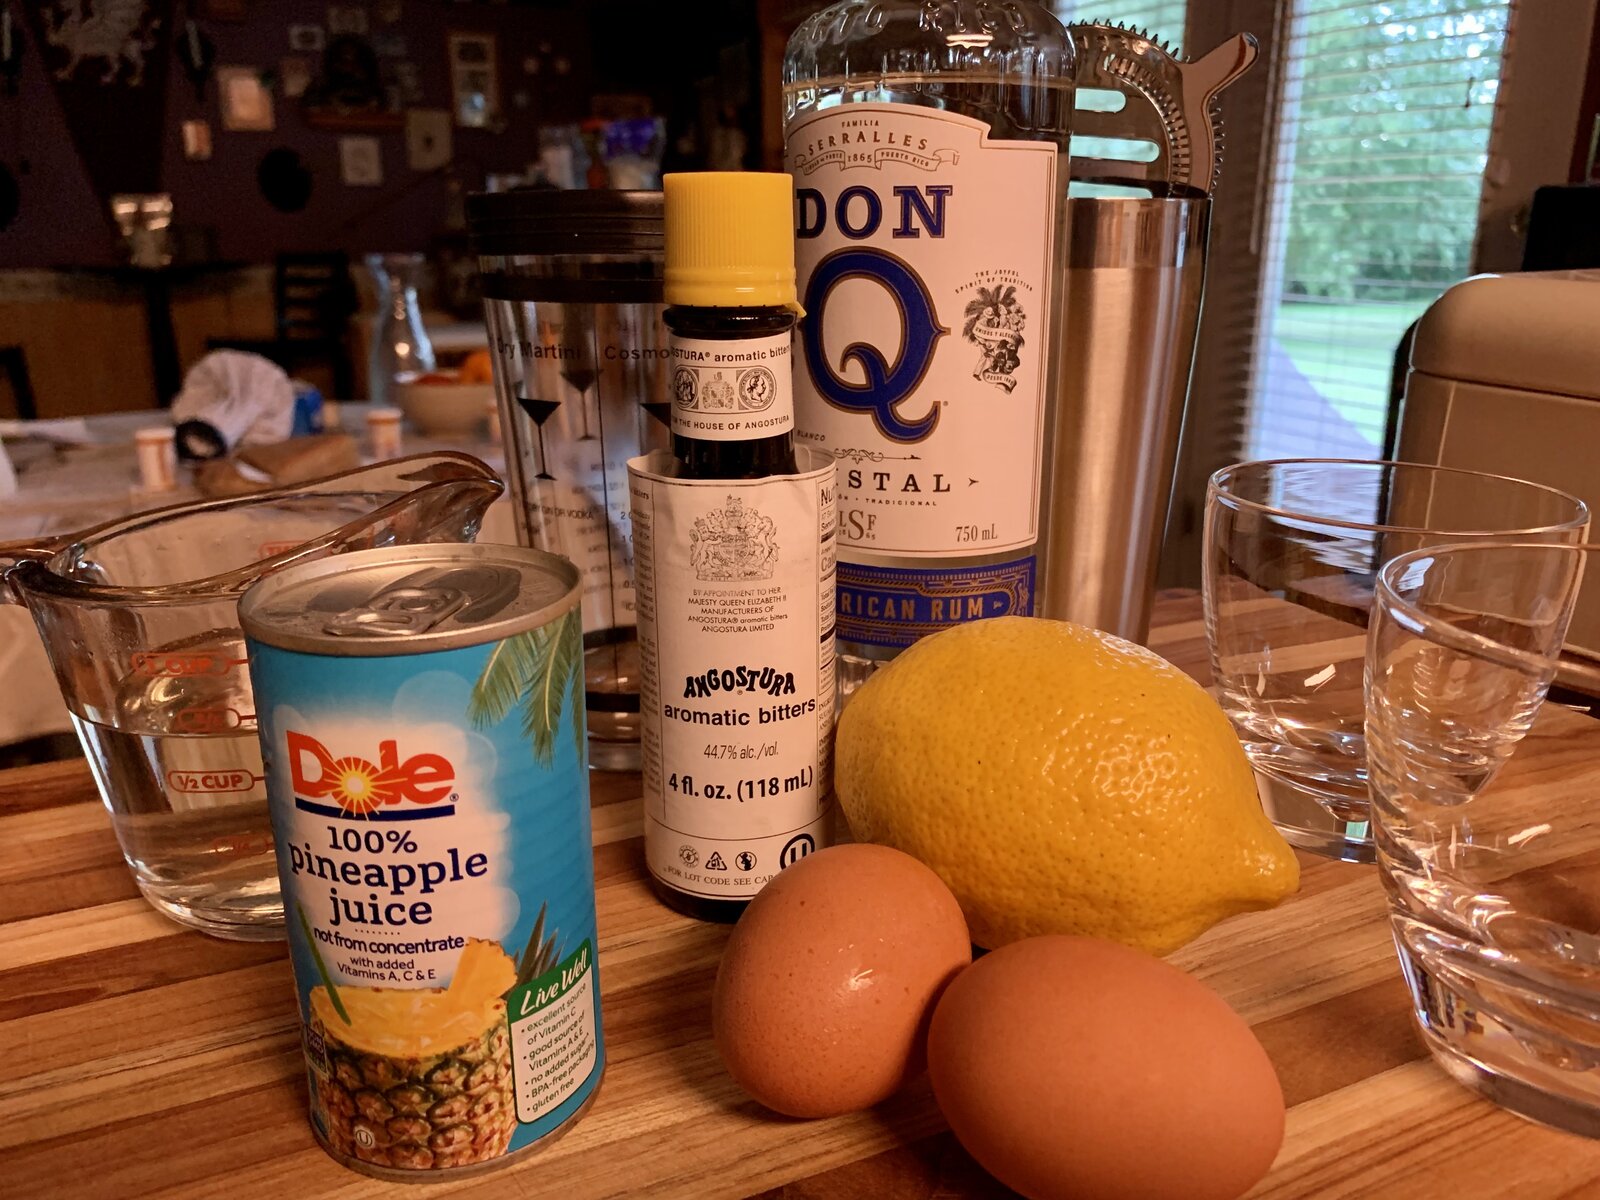 Cocktail Ingredients